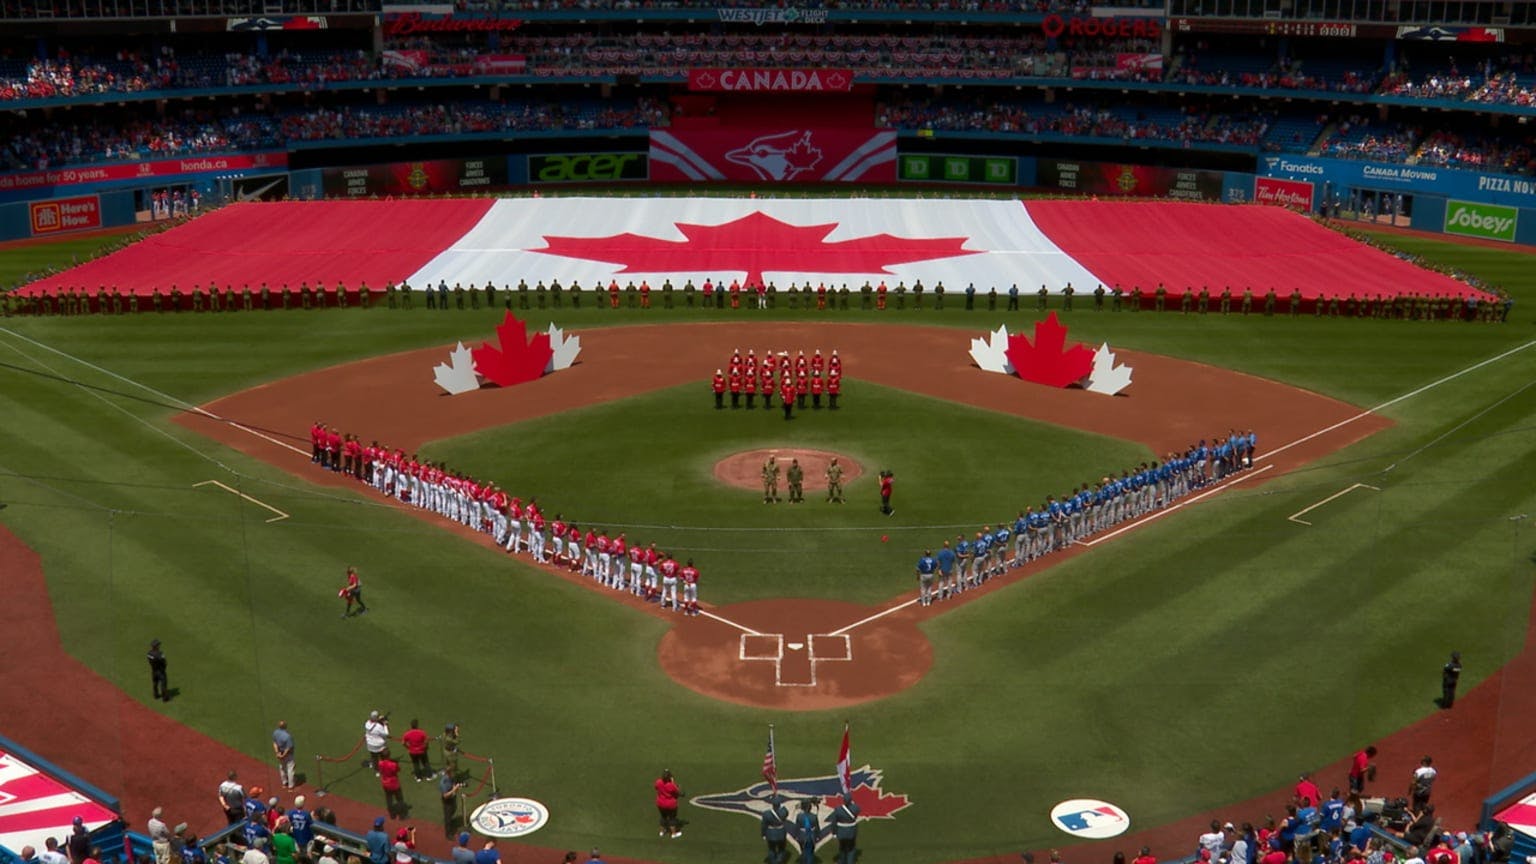 GDB 84.0: Toronto Blue Jays host Boston Red Sox on Canada Day